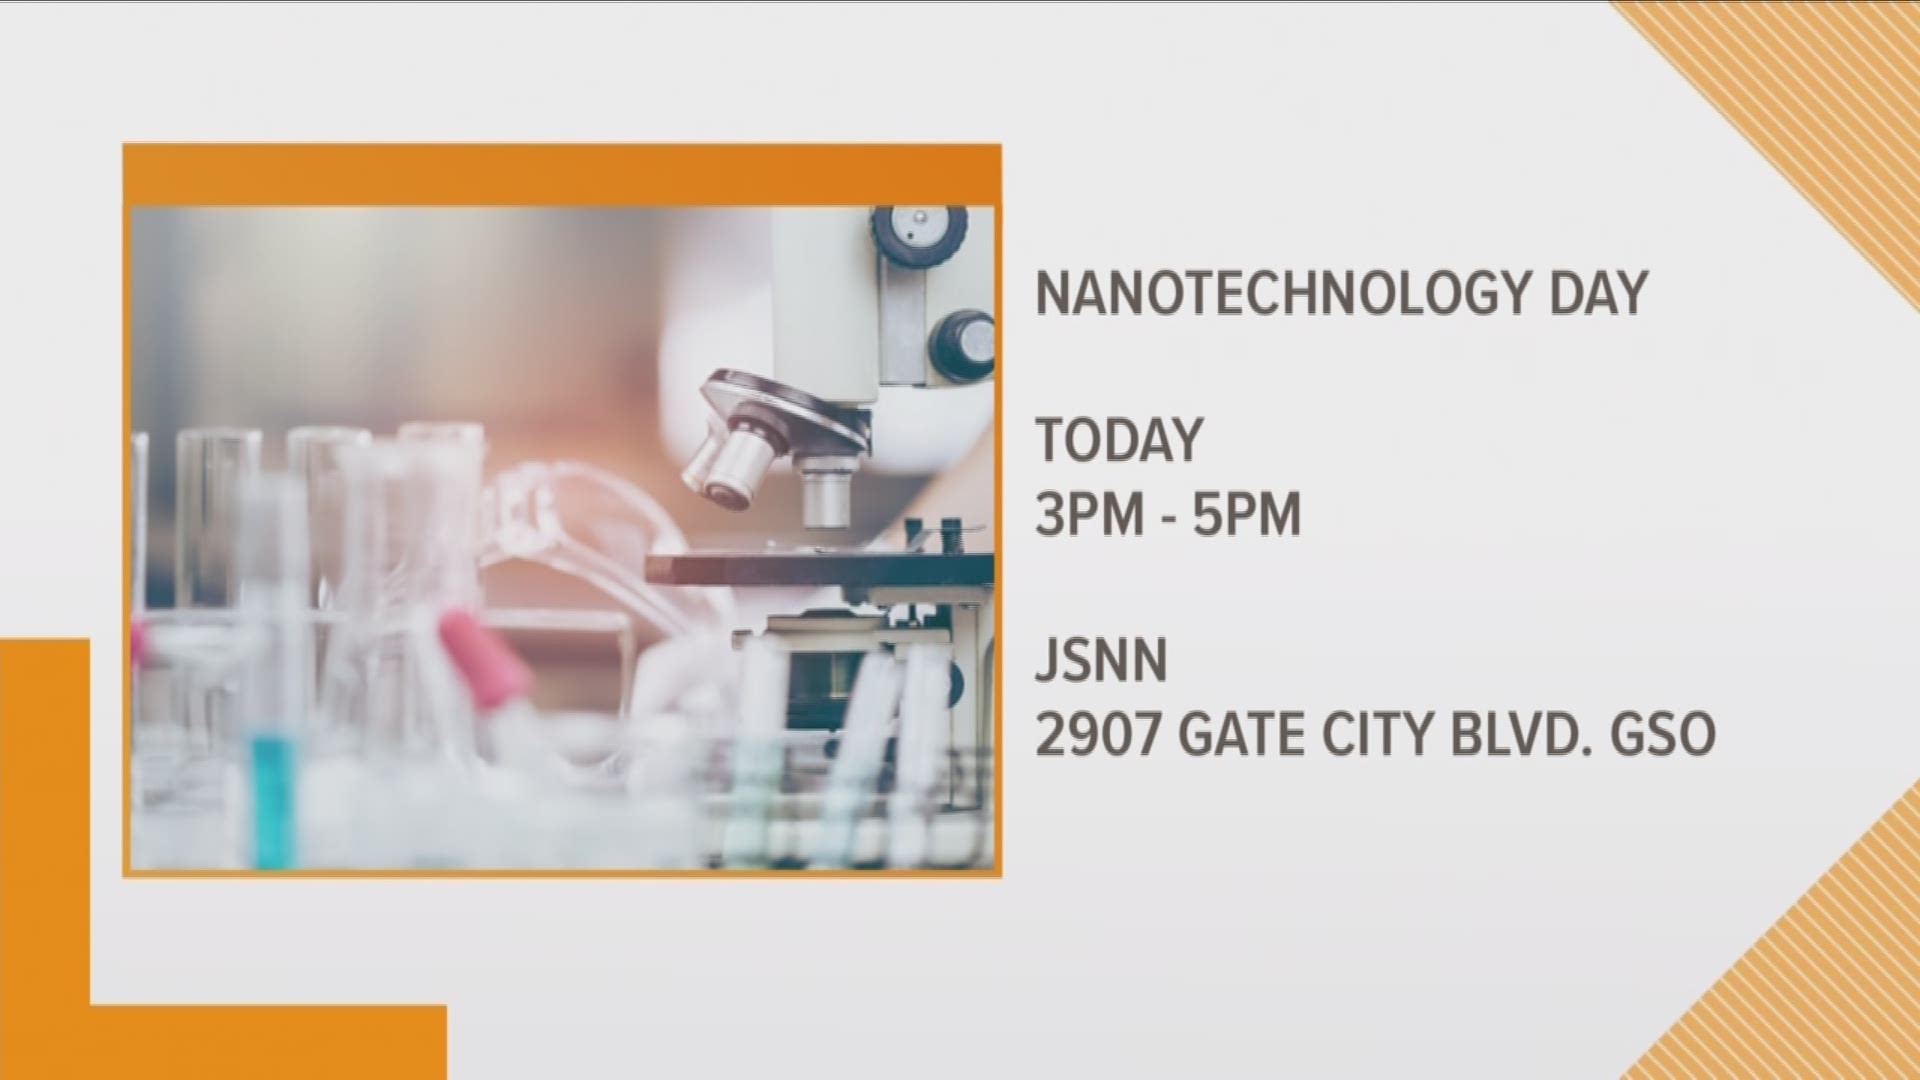 JSNN Holds Nano Day celebration on Wednesday from 3pm to 5pm.